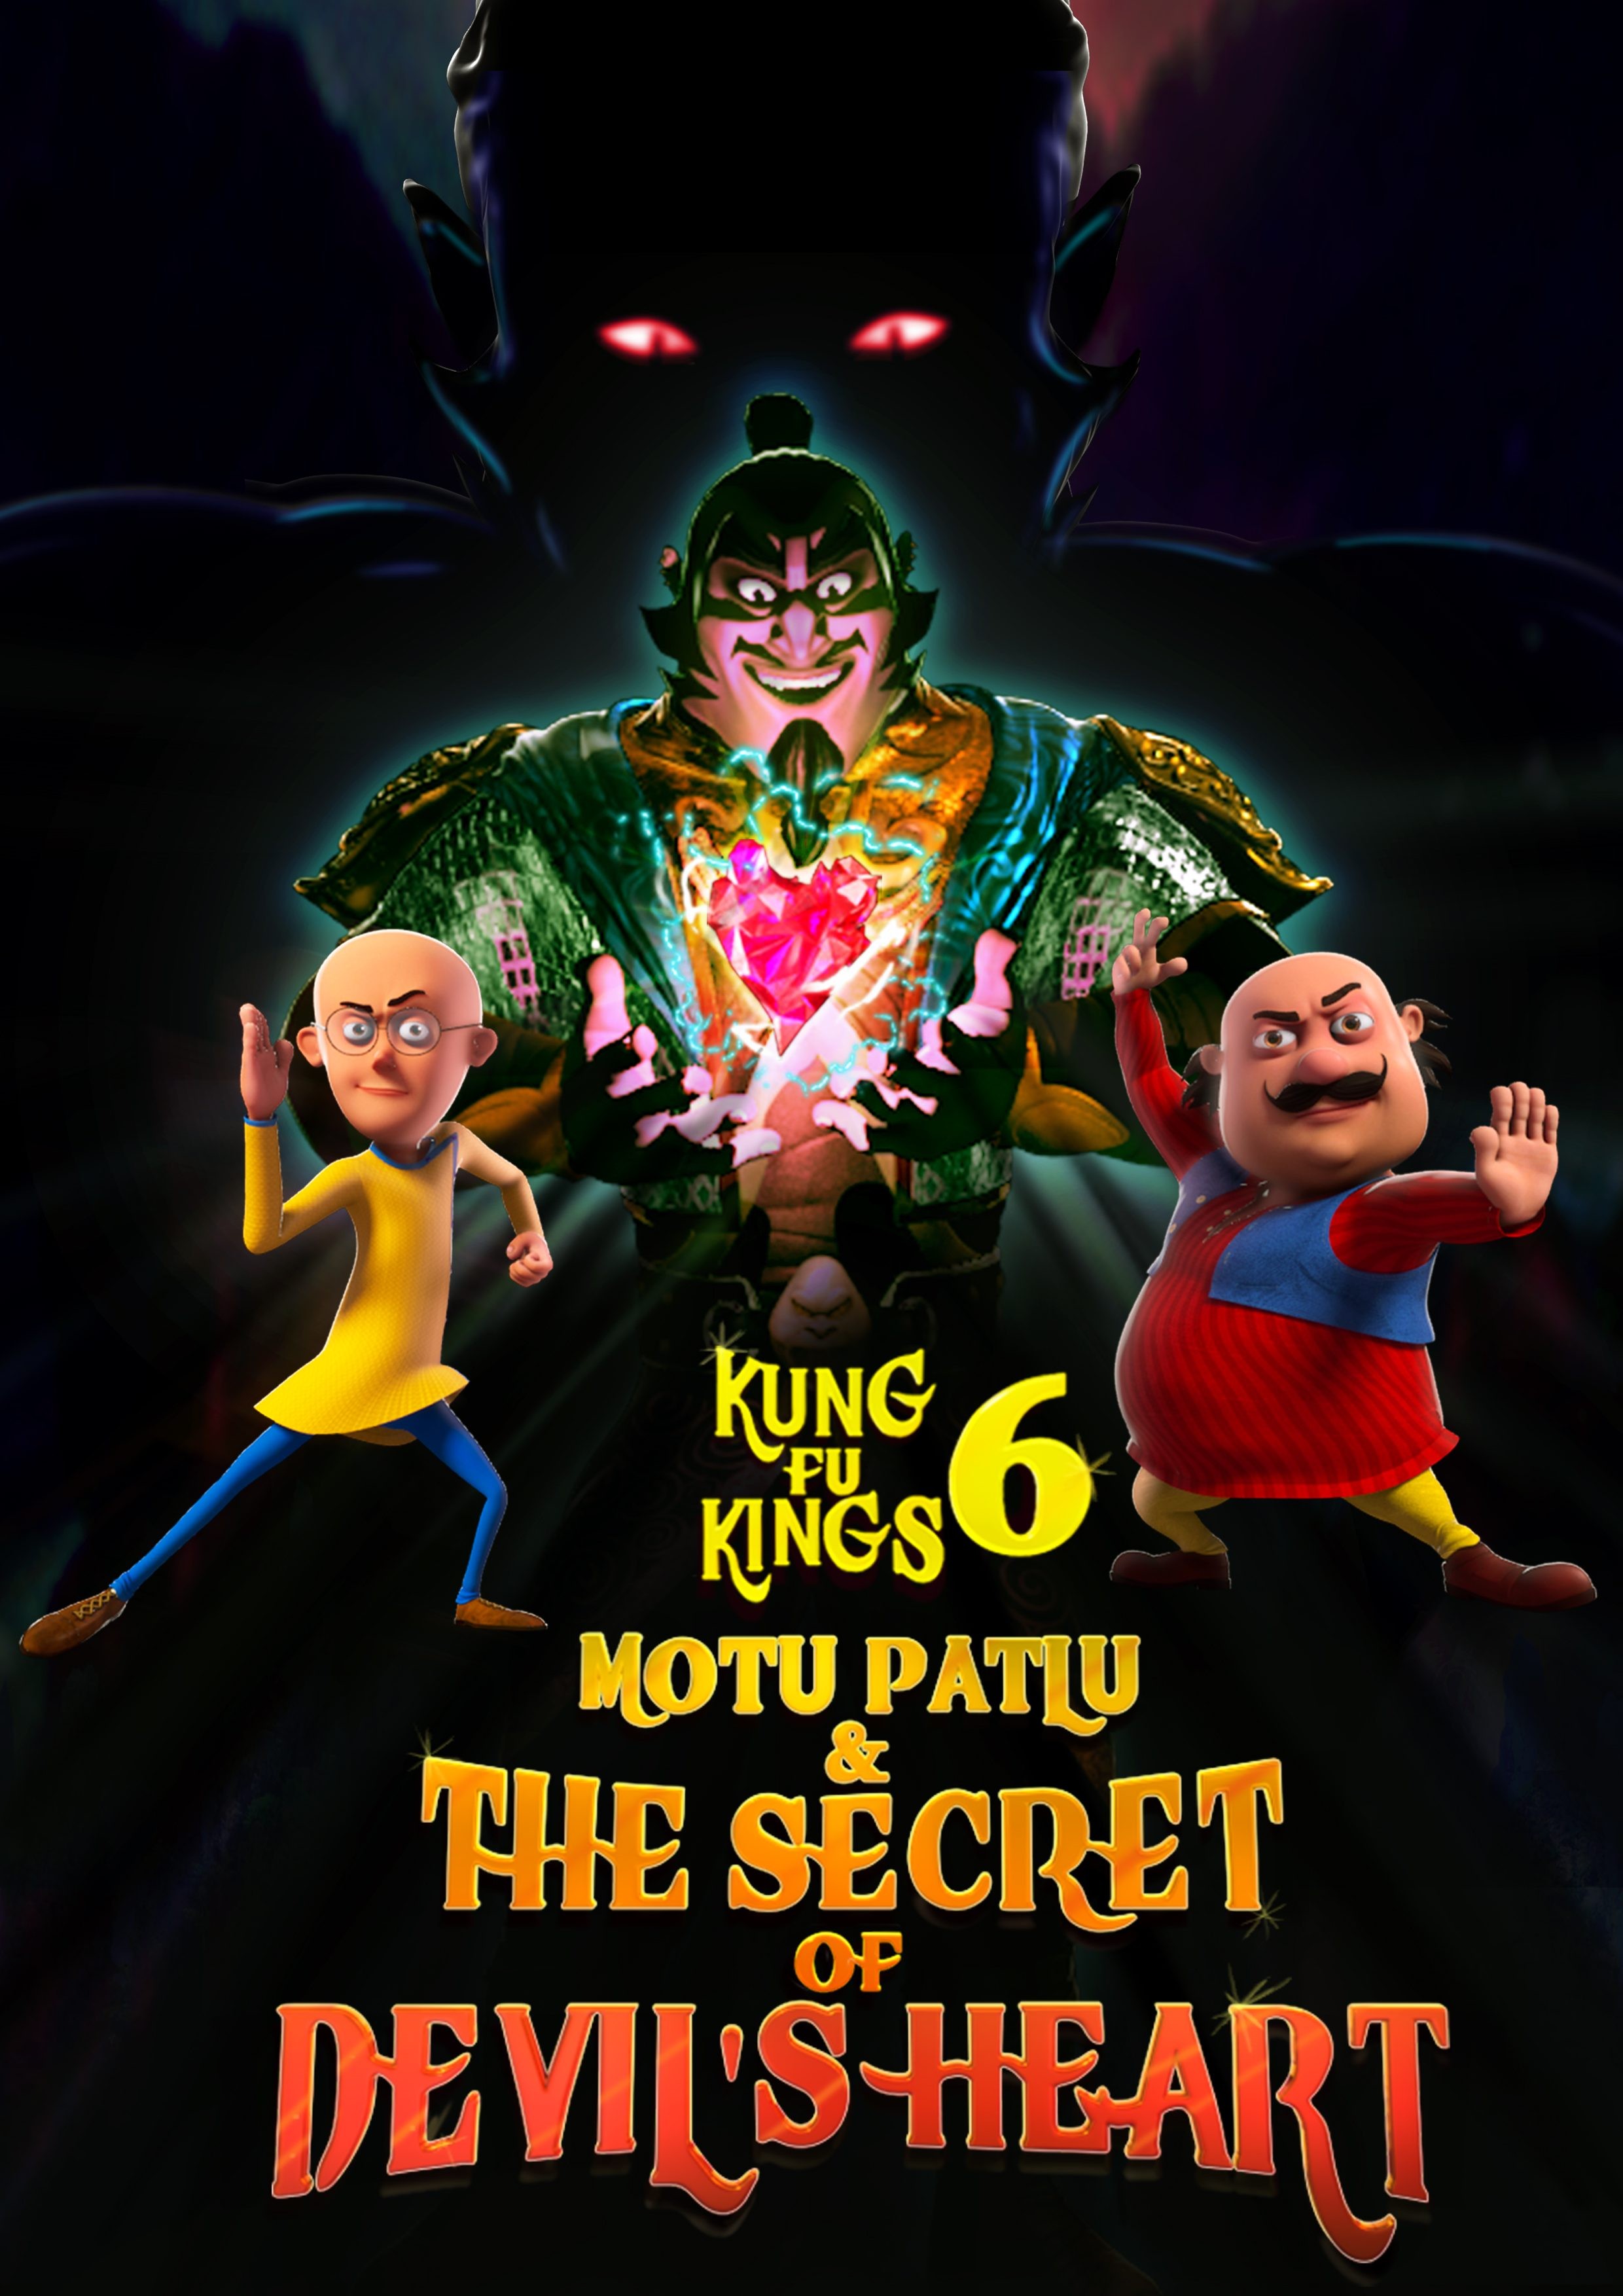 Motu Patlu and the Secret of Devils Heart (2022) 480p HDRip Hindi ORG Multi Audio Movie [400MB]